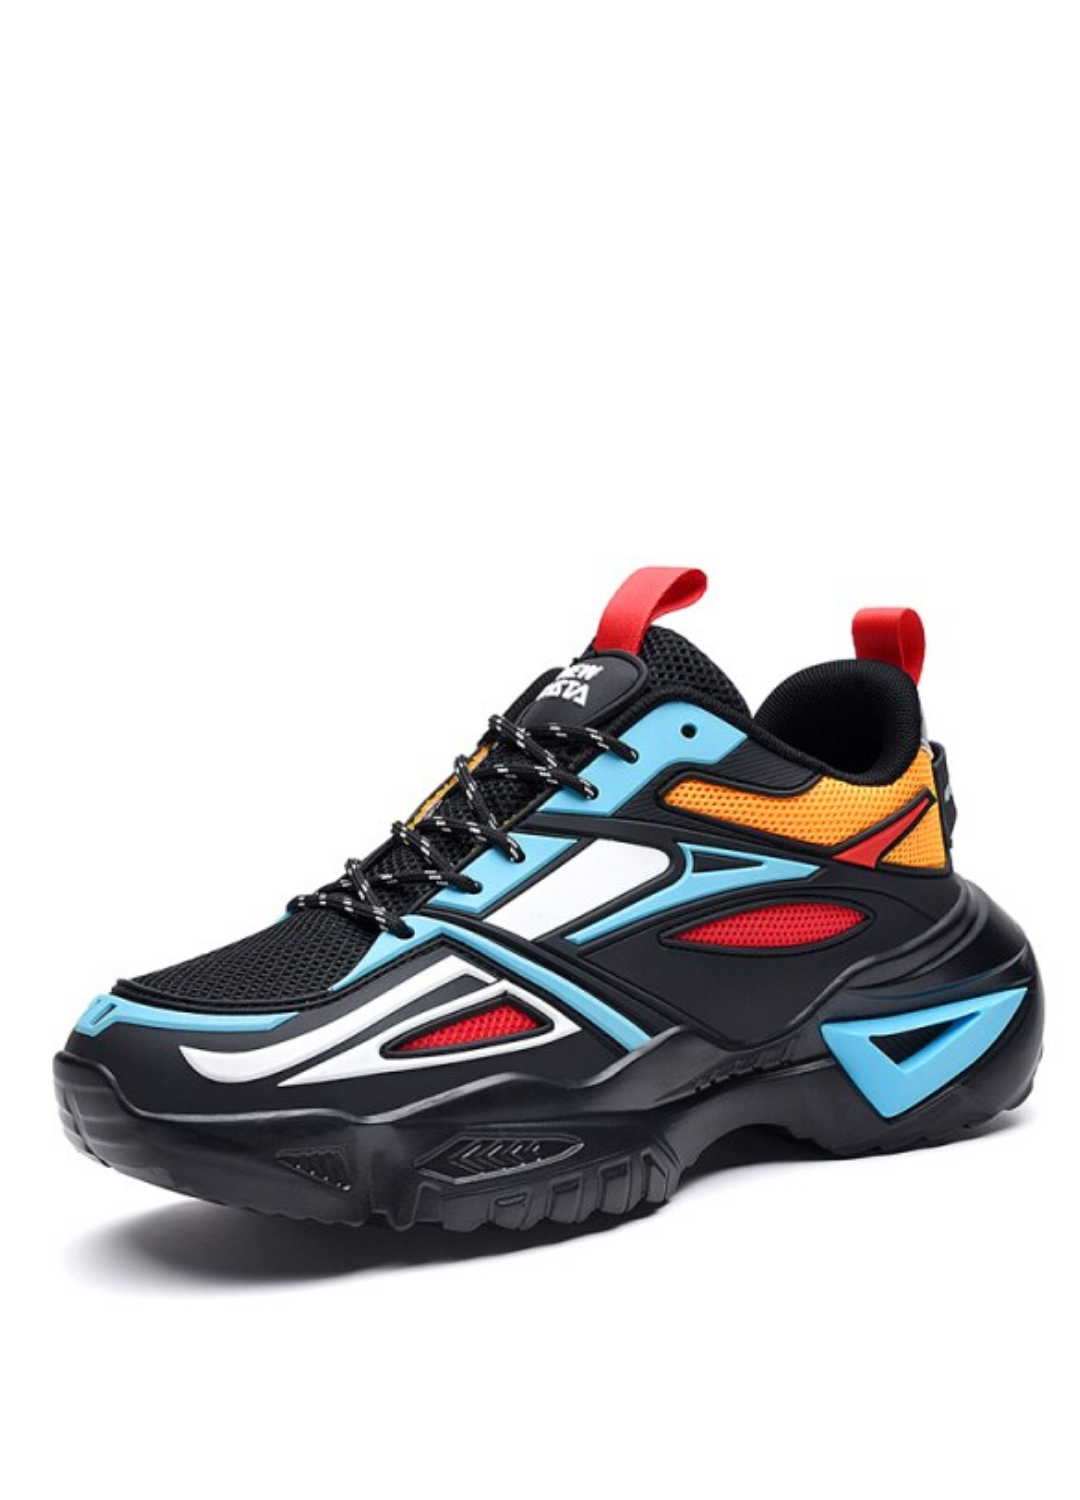 Decidweye Men's Running Sneakers | Ultrasellershoes.com – USS Shoes